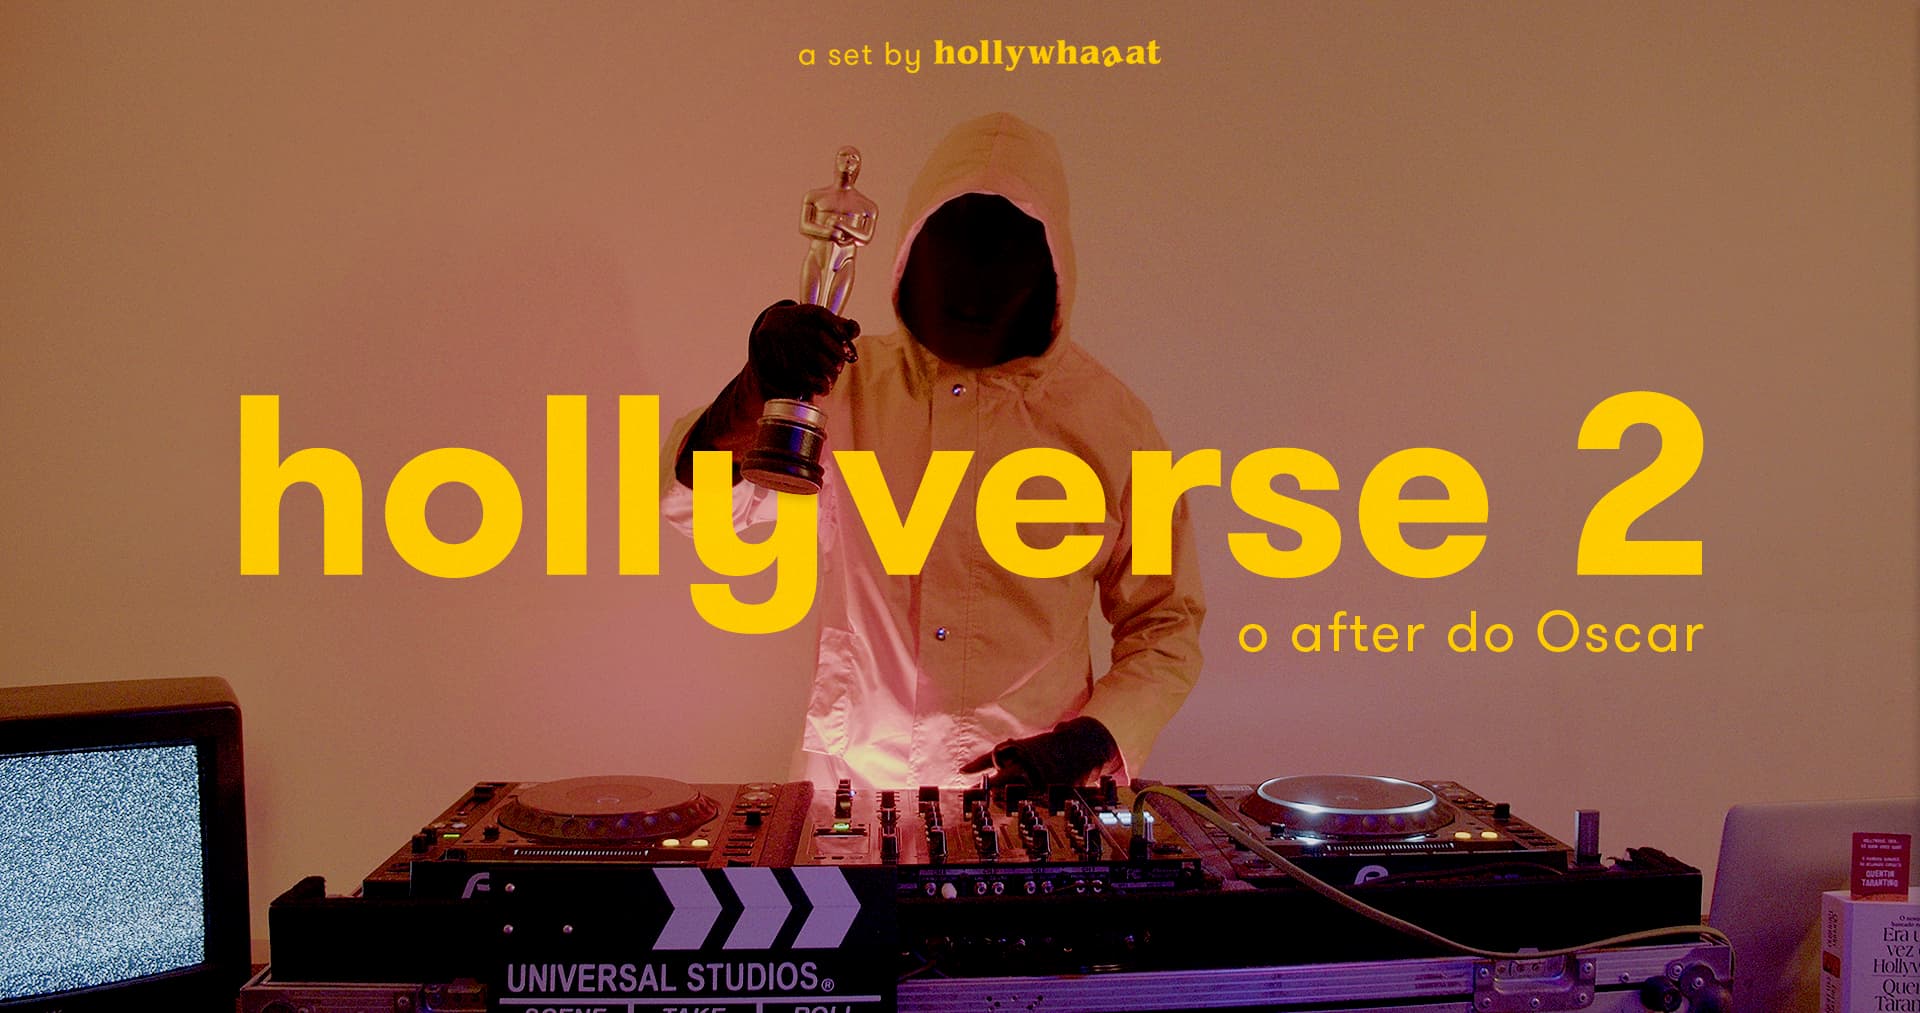 Hollywhaaat apresenta seu novo set cinematográfico "hollyverse 2"